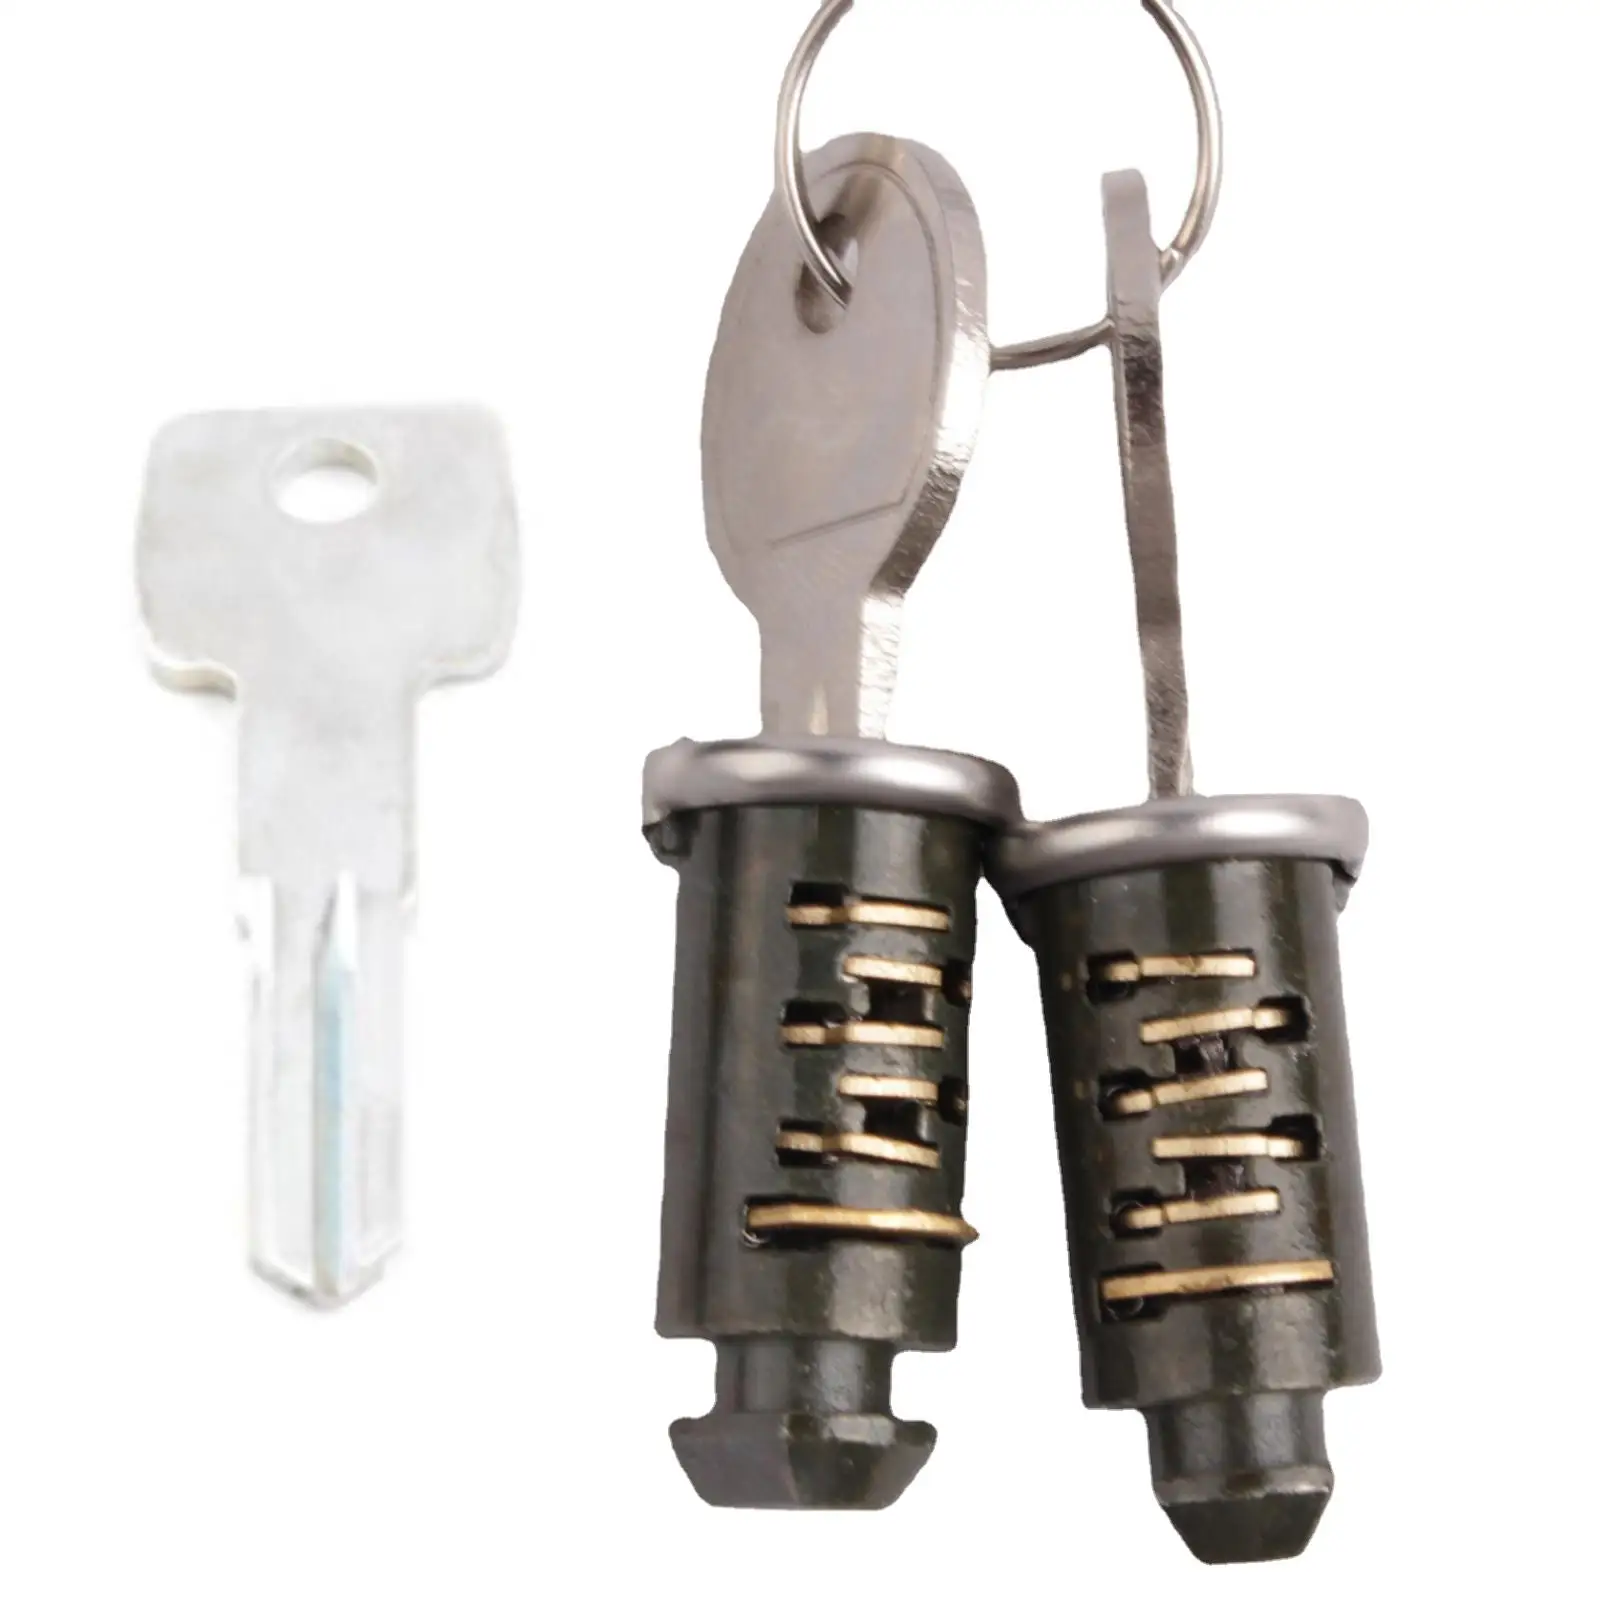 Lock Cylindes Professional Detachable Rooftop Cargo Rack Locks Rack Parts Cross Bars Locks and Key Kit Accessories Lock Core